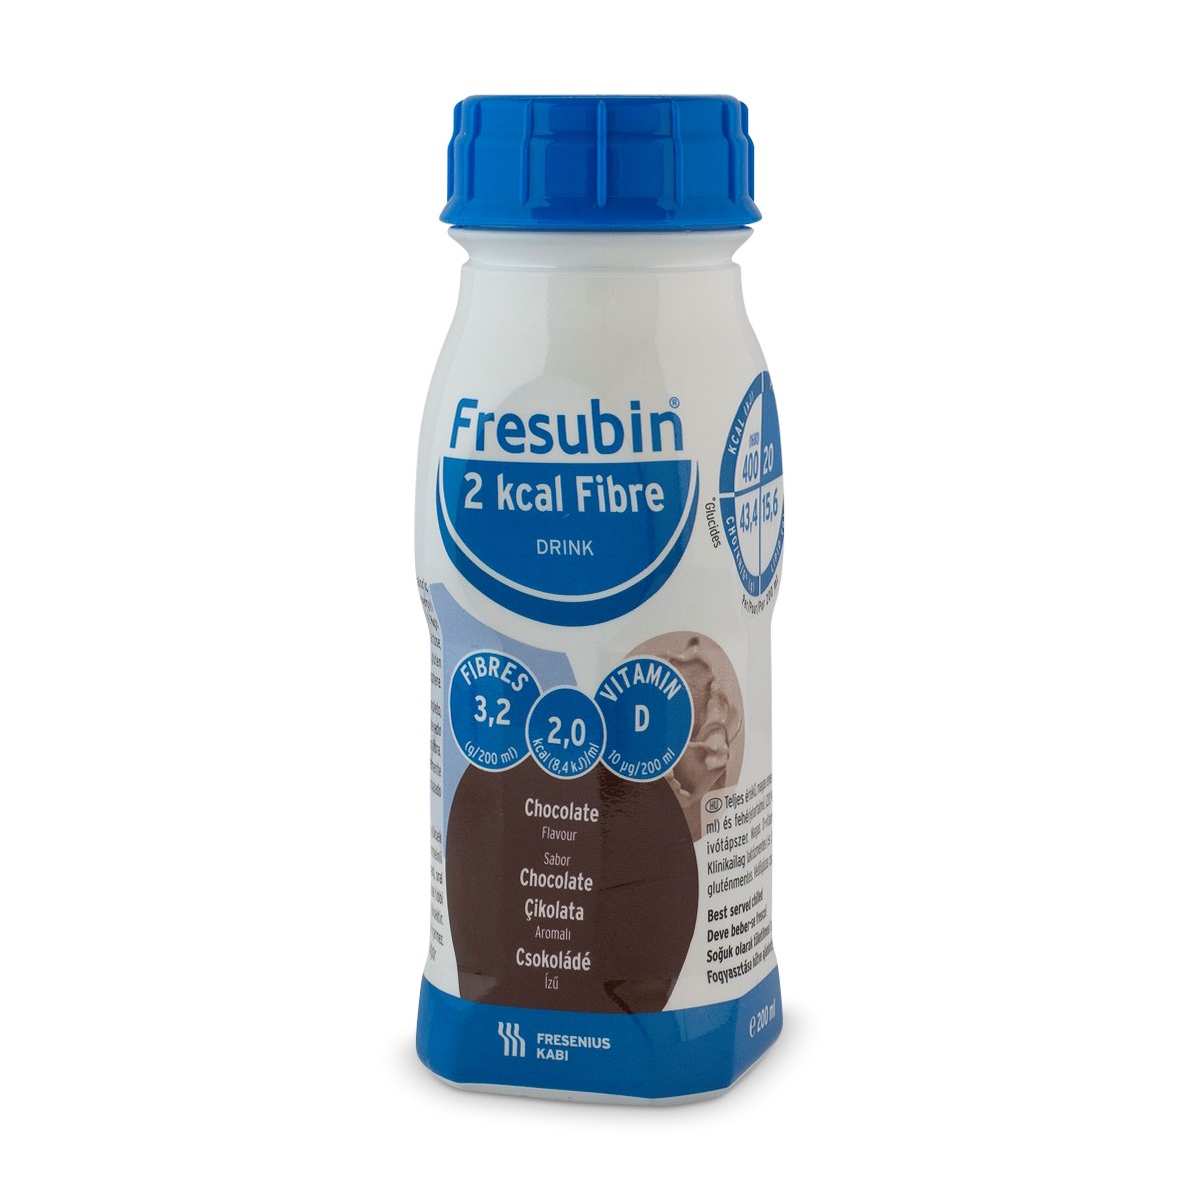 Fresubin® 2kcal Fibre Drink Chocolate